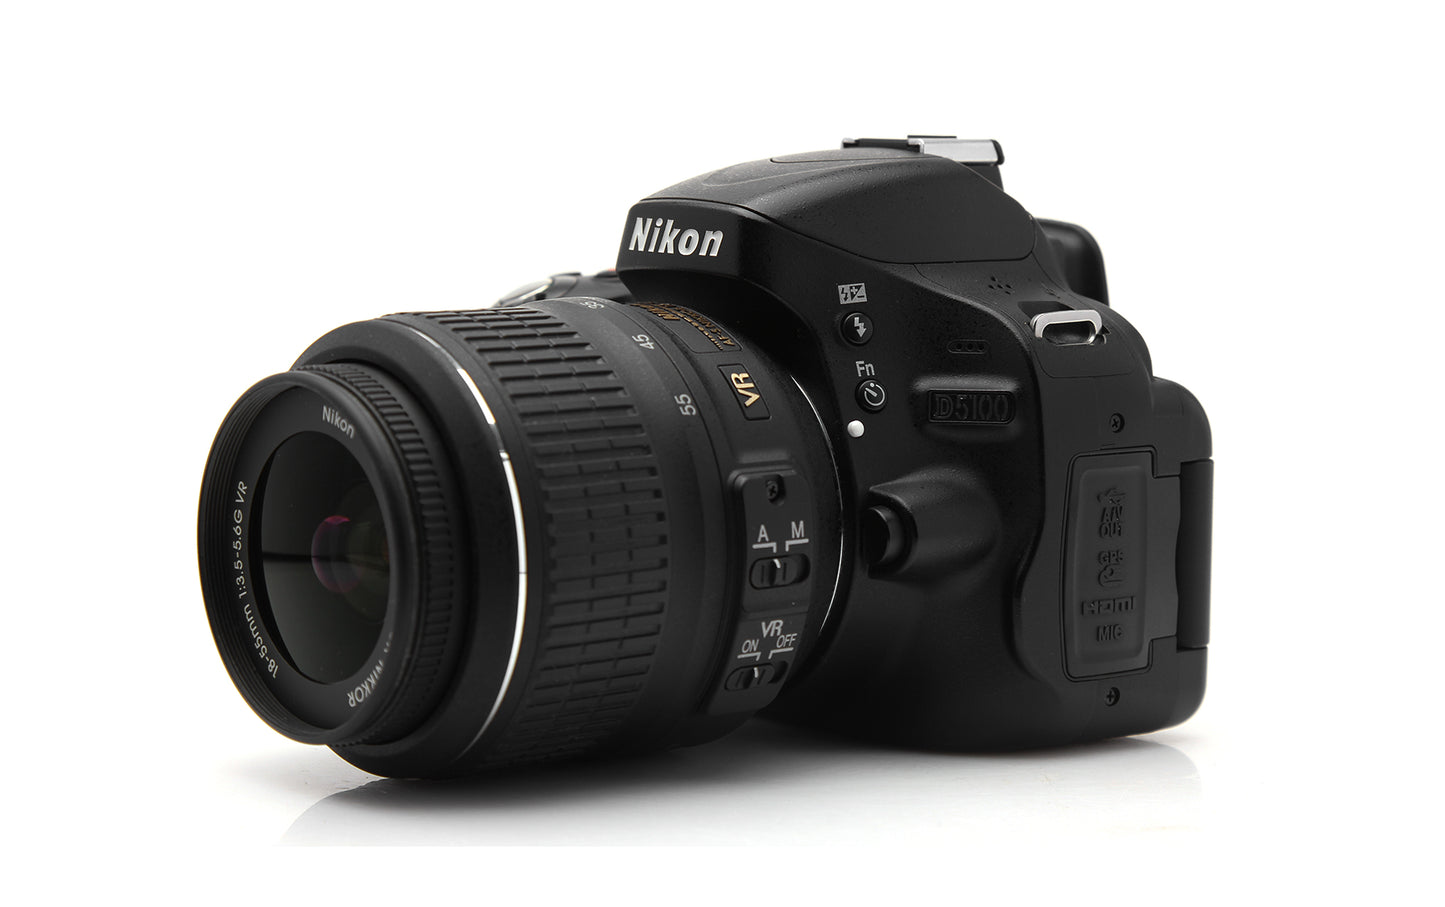 Used Nikon D5100 DSLR Camera with 18-55mm Lens